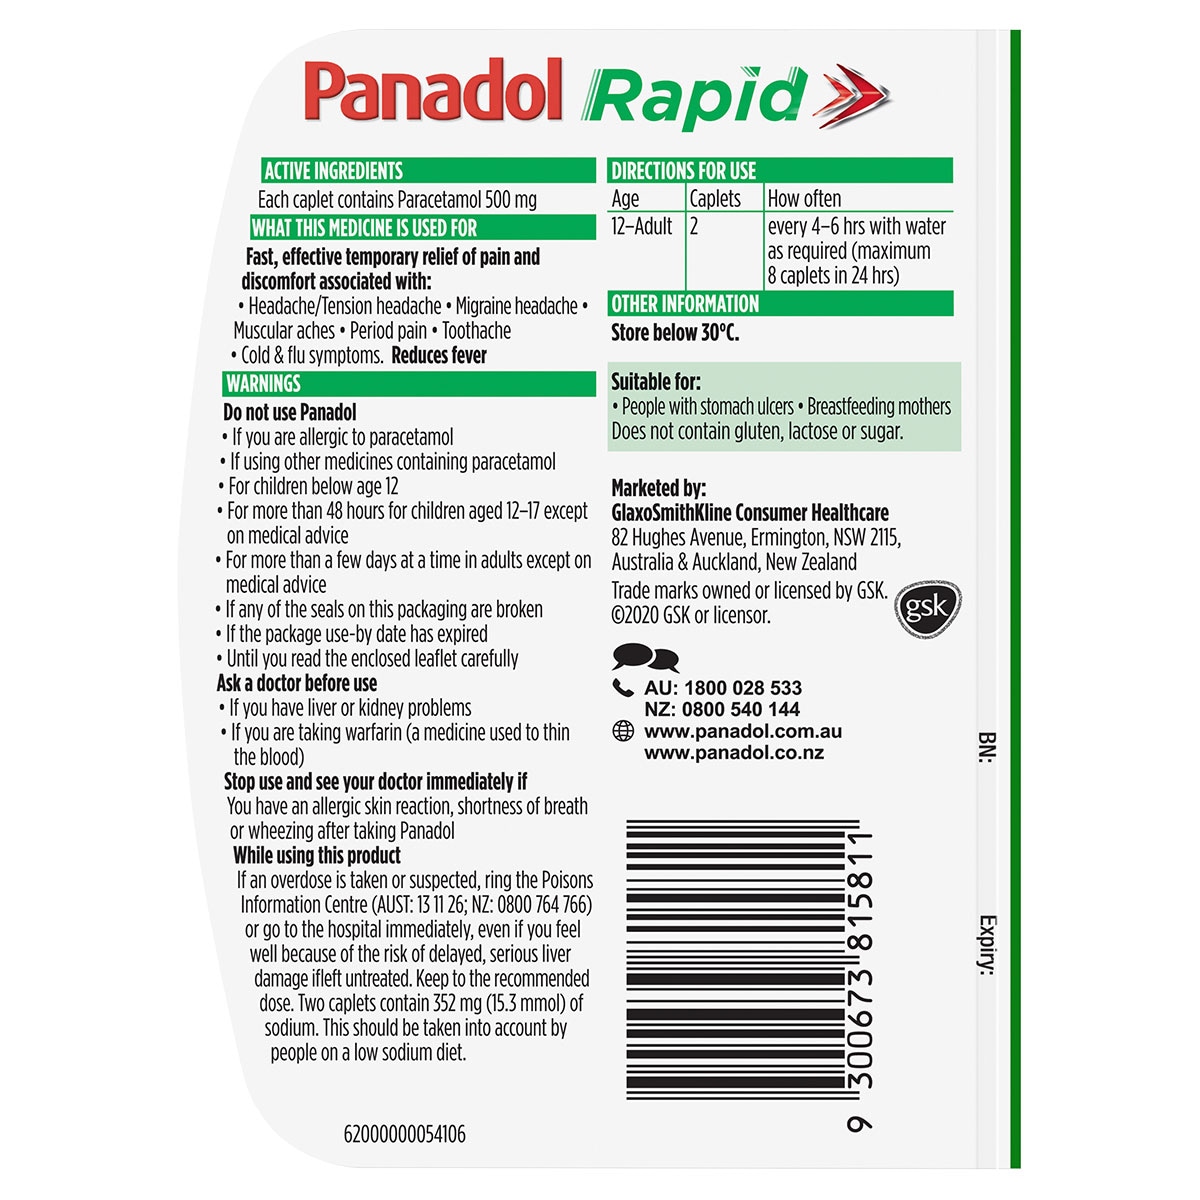 Panadol Rapid Fast Pain Relief Handipak 10 Caplets